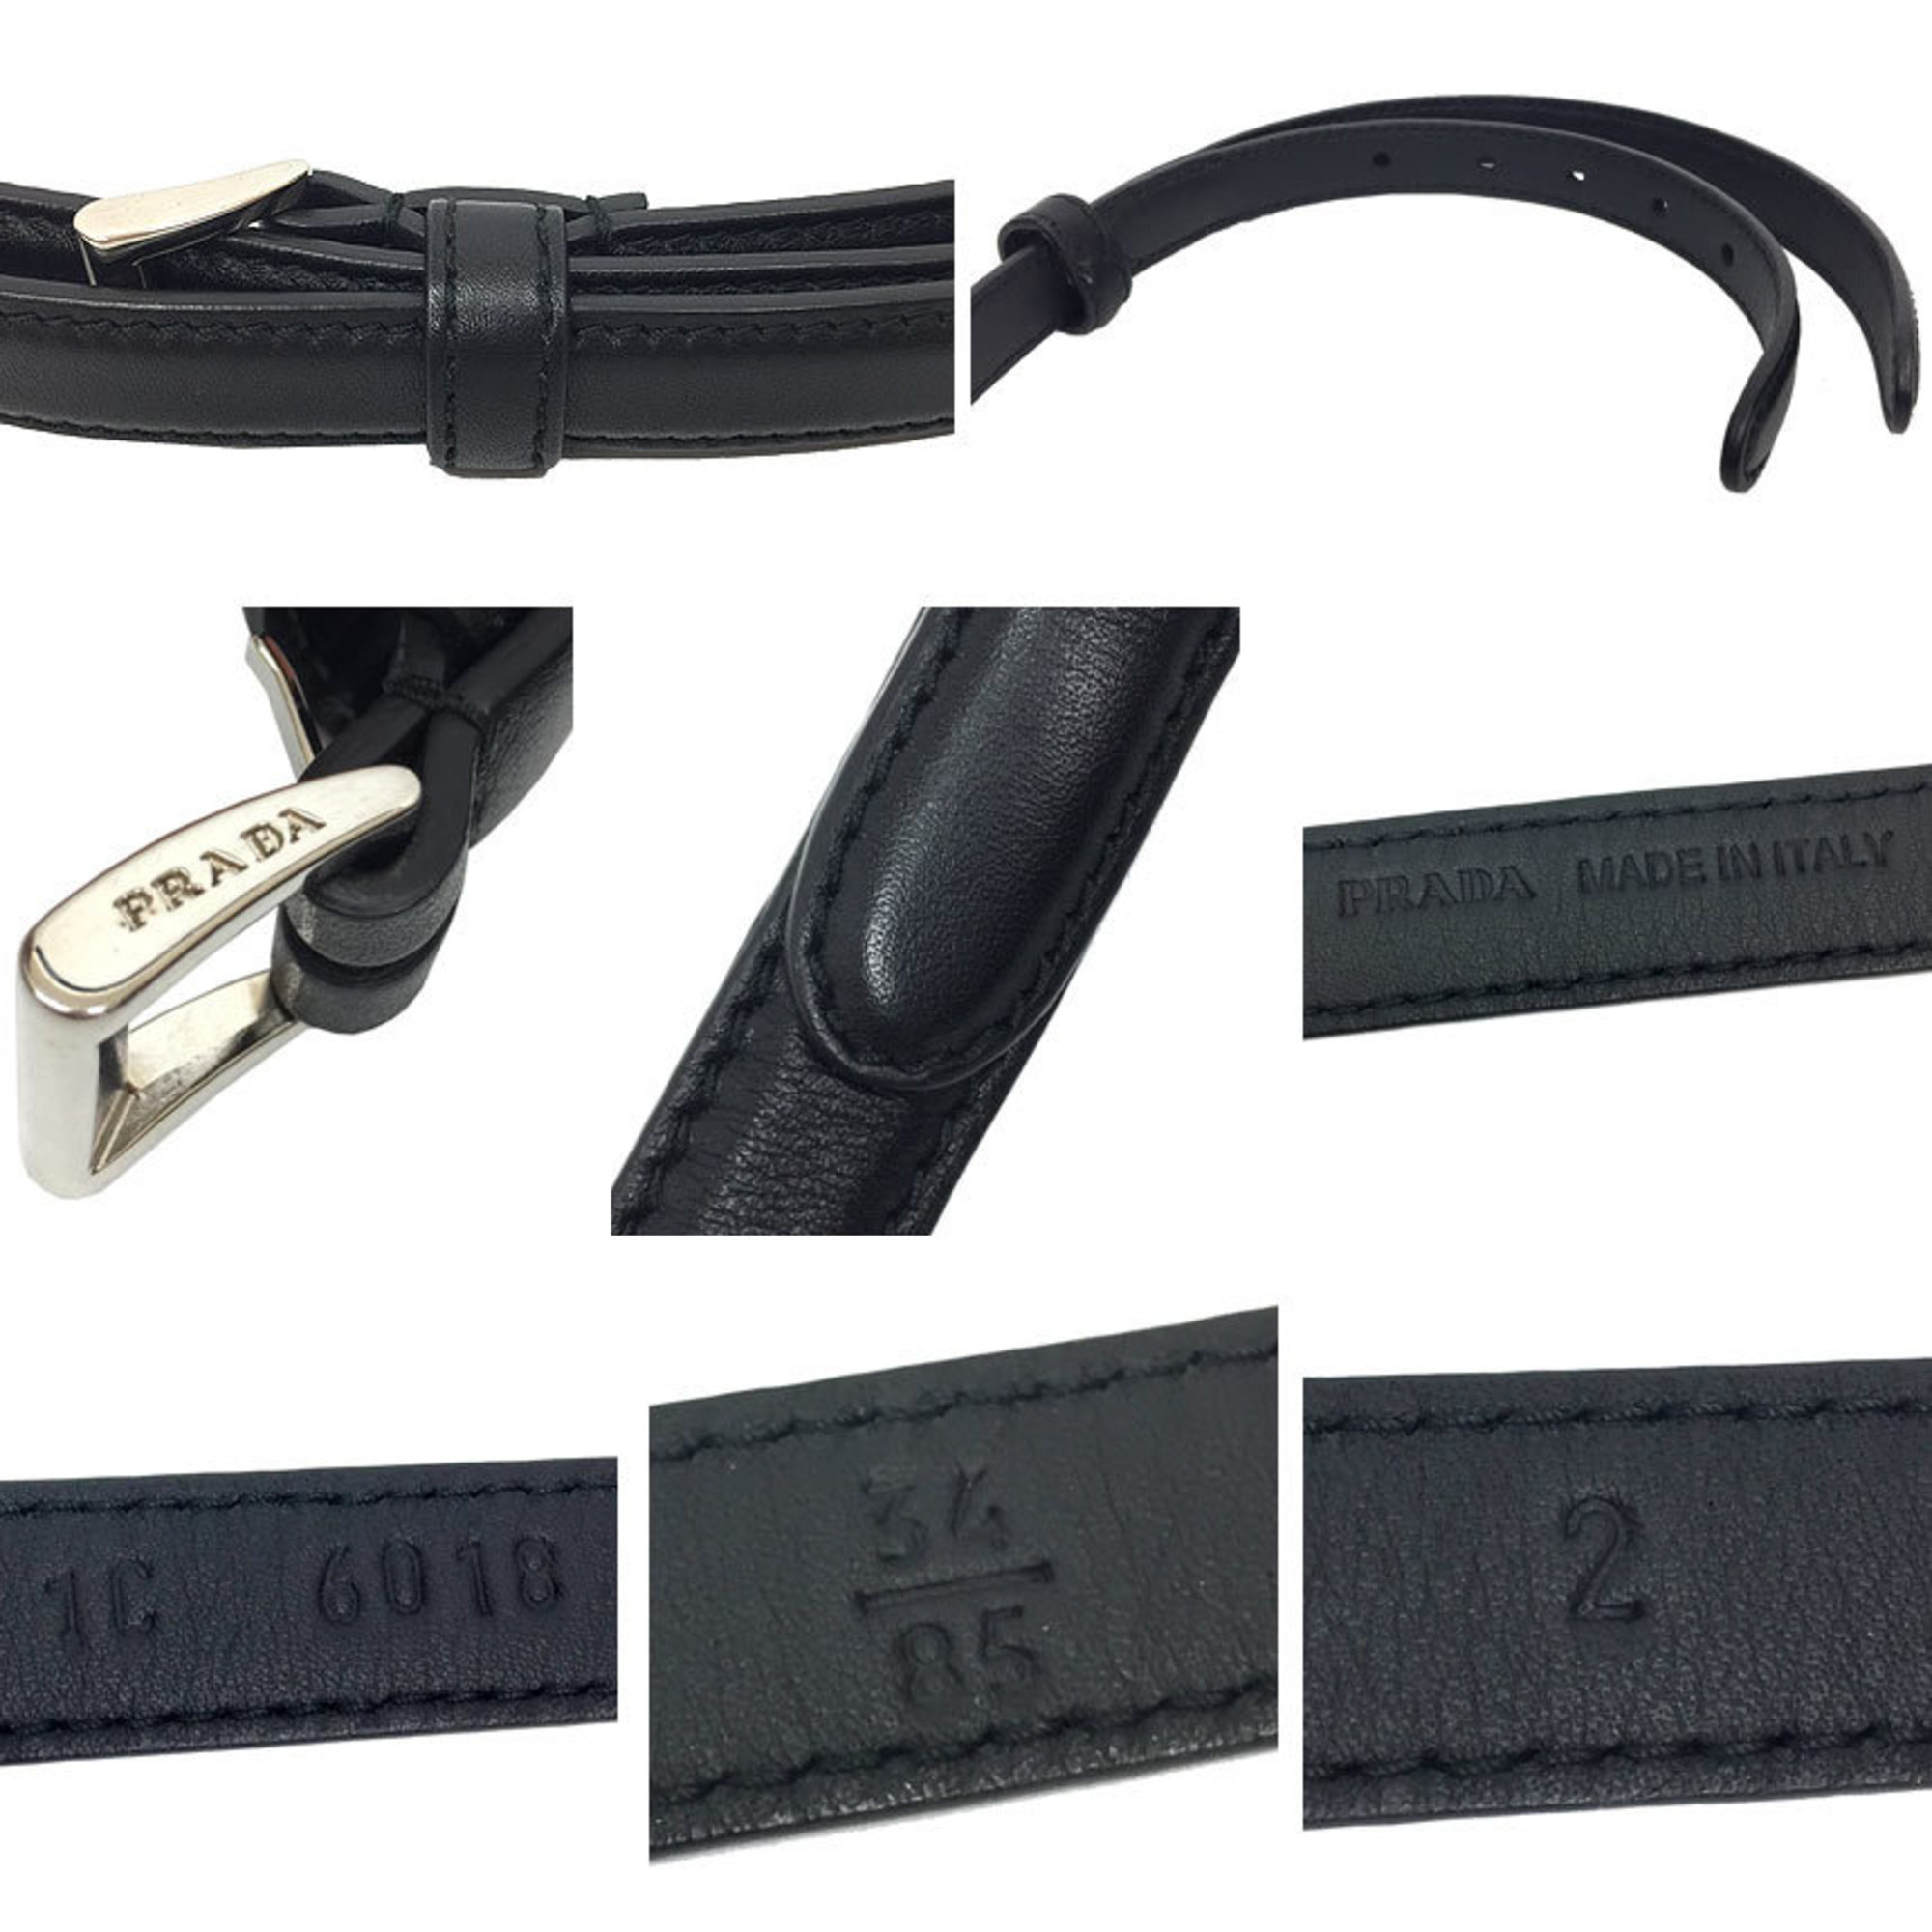 Prada PRADA narrow belt 1C6018 85/34 size silver buckle black leather aq6681